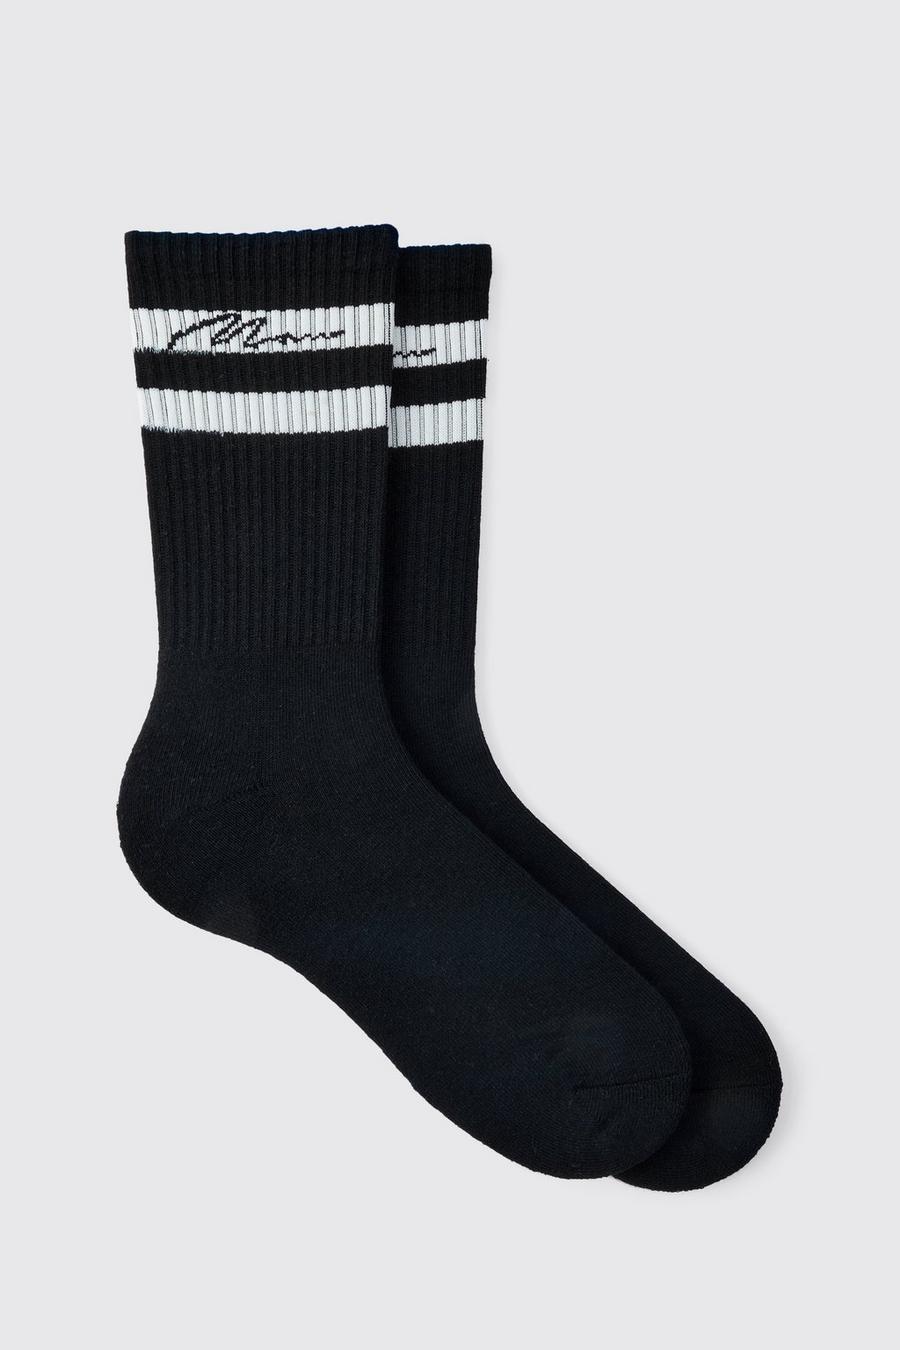 Pack de 3 pares de calcetines negros con firma MAN deportivos, Black image number 1